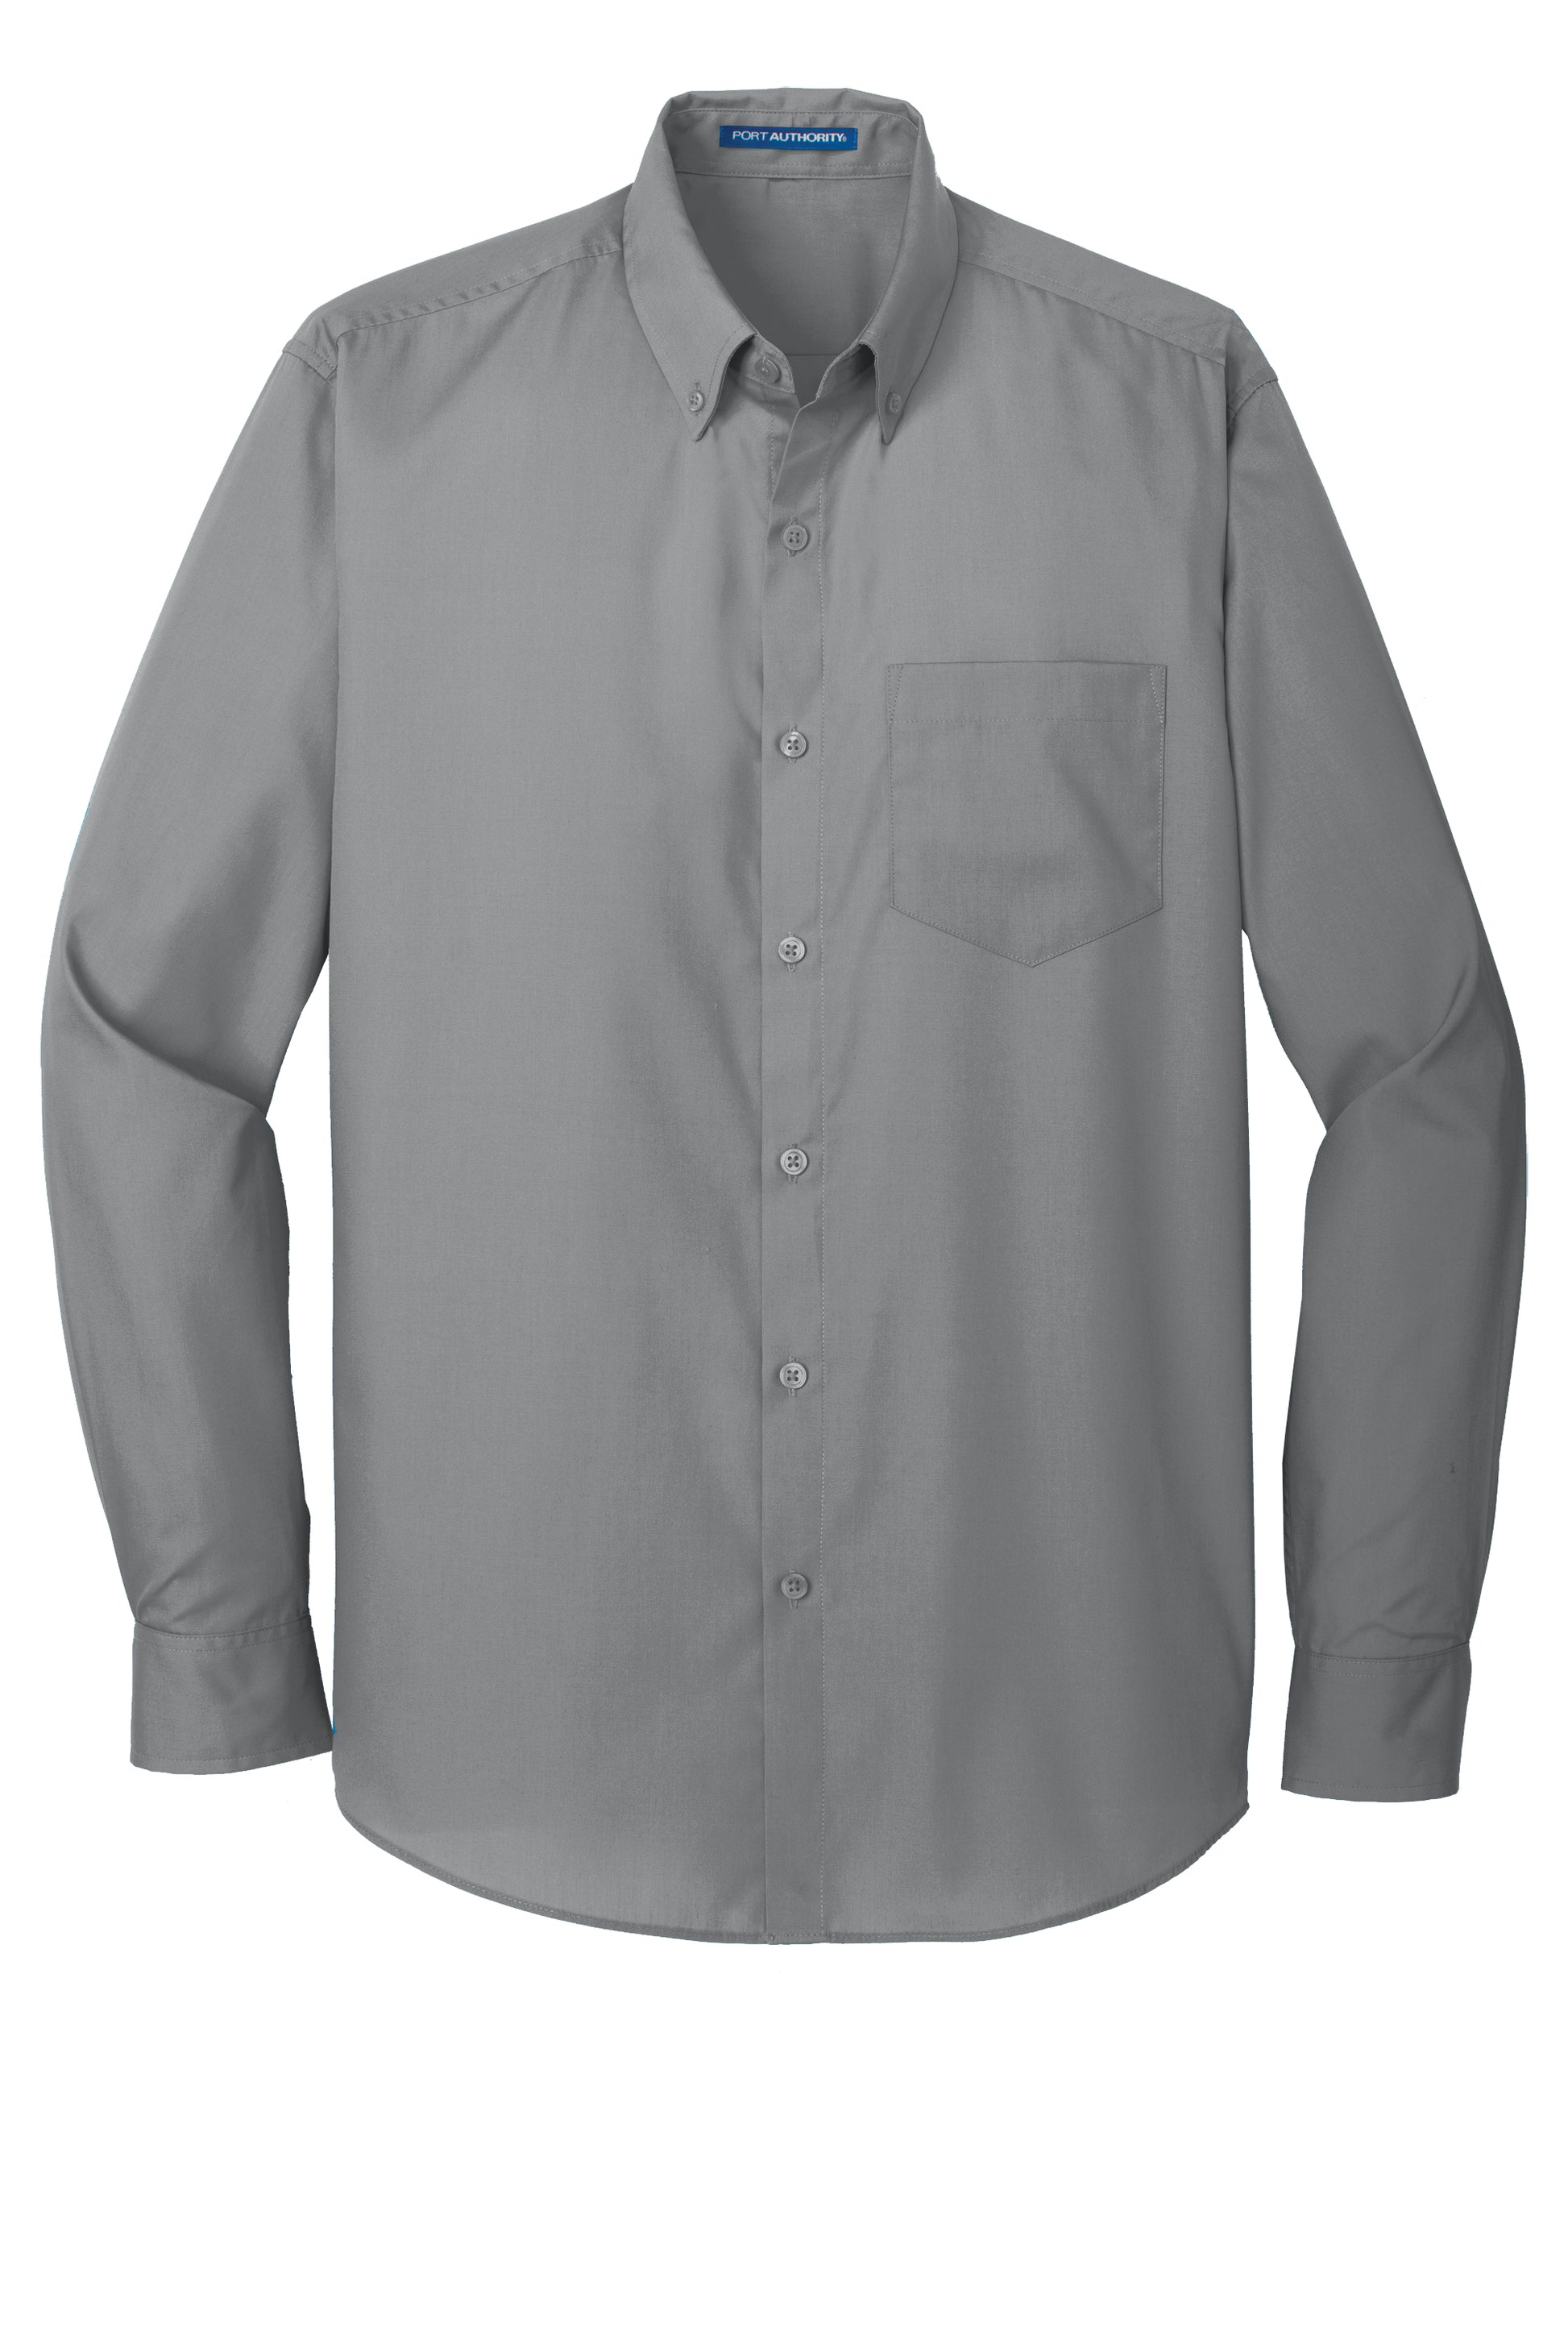 port authority long sleeve carefree poplin shirt gusty grey